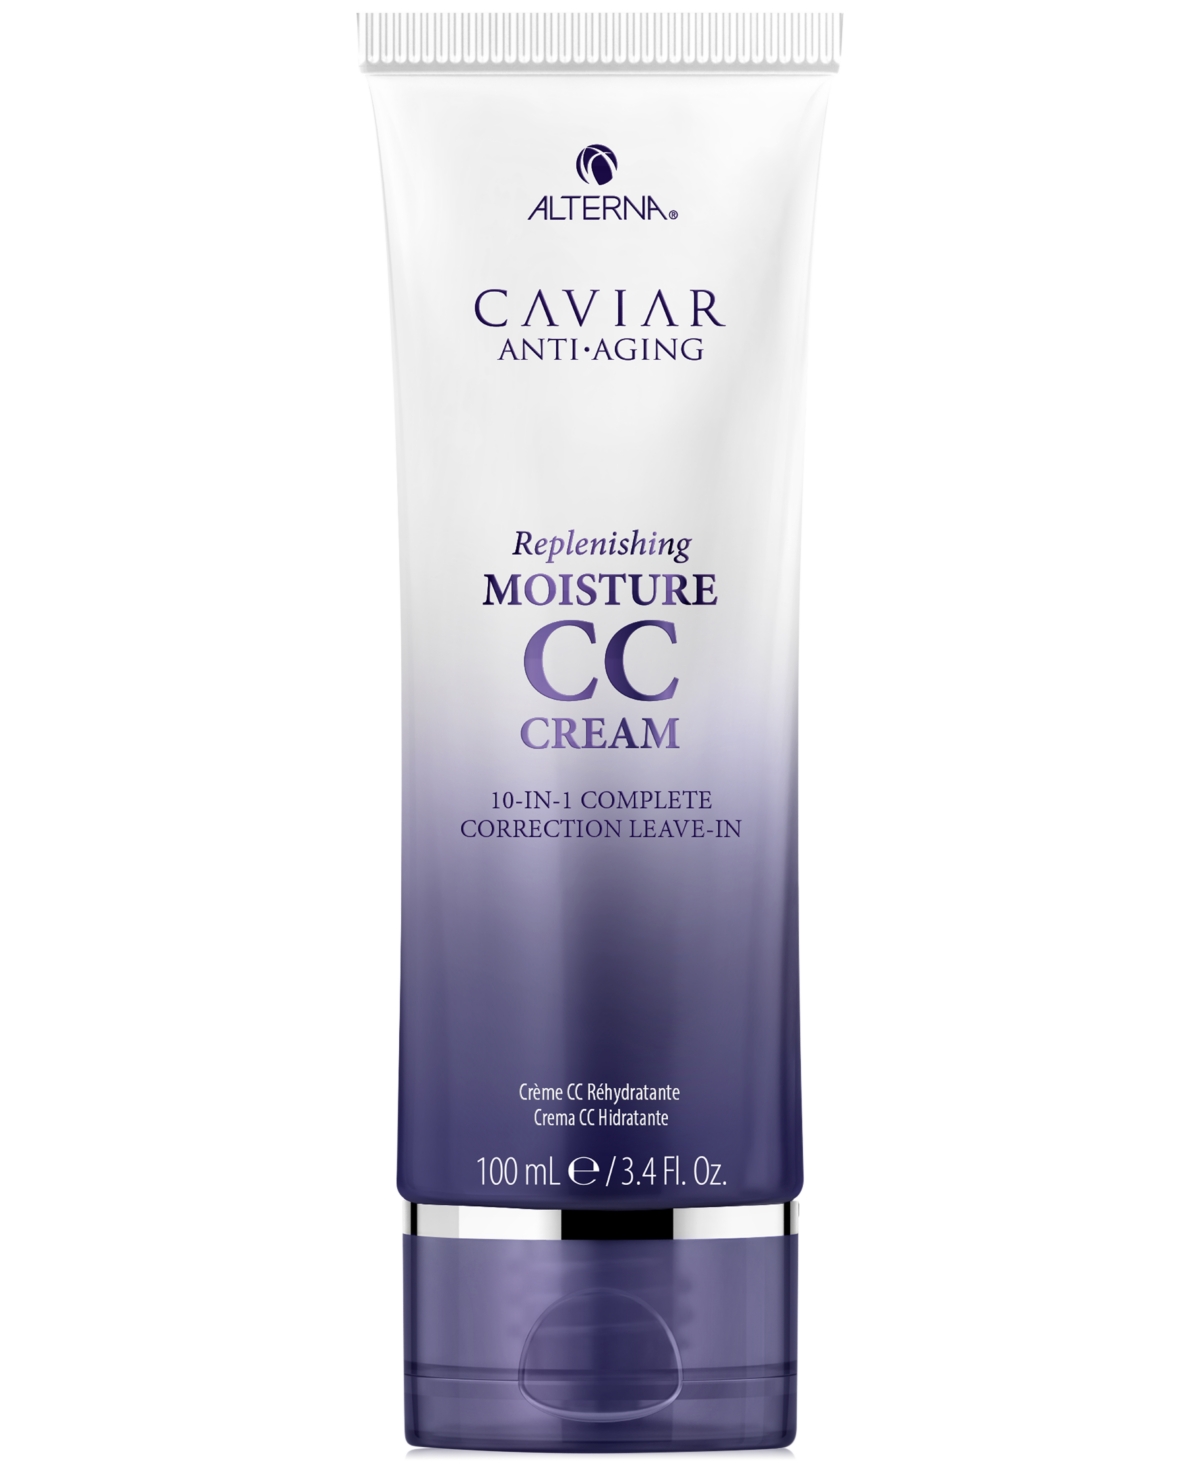 Caviar Anti-Aging Replenishing Moisture Cc Cream, 3.4-oz.